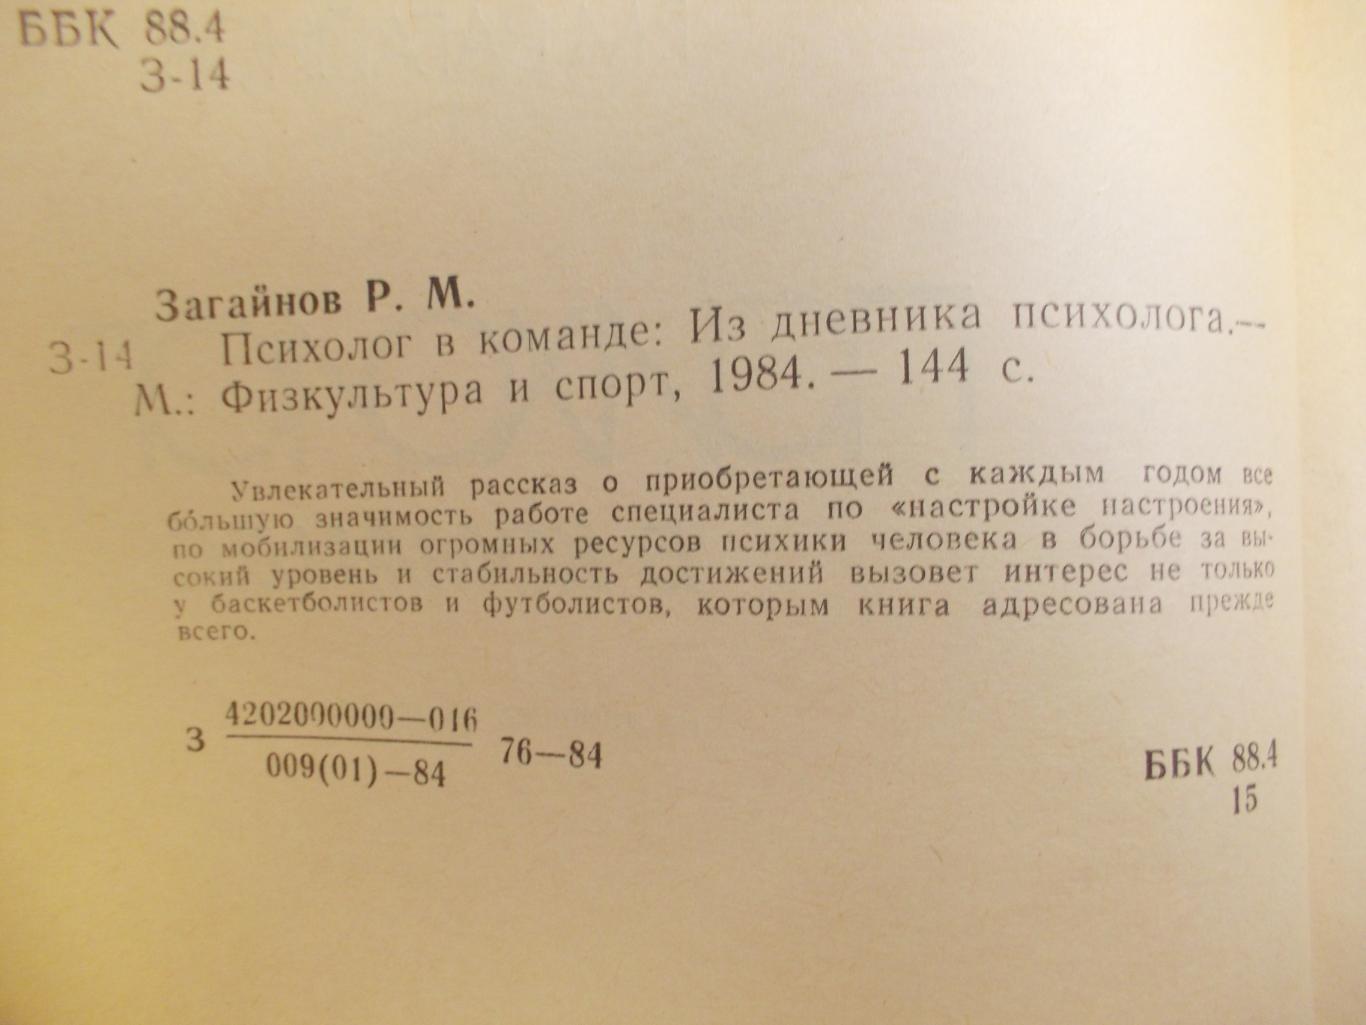 Р. Загайнов Психолог в команде 144с. 1984г. 1